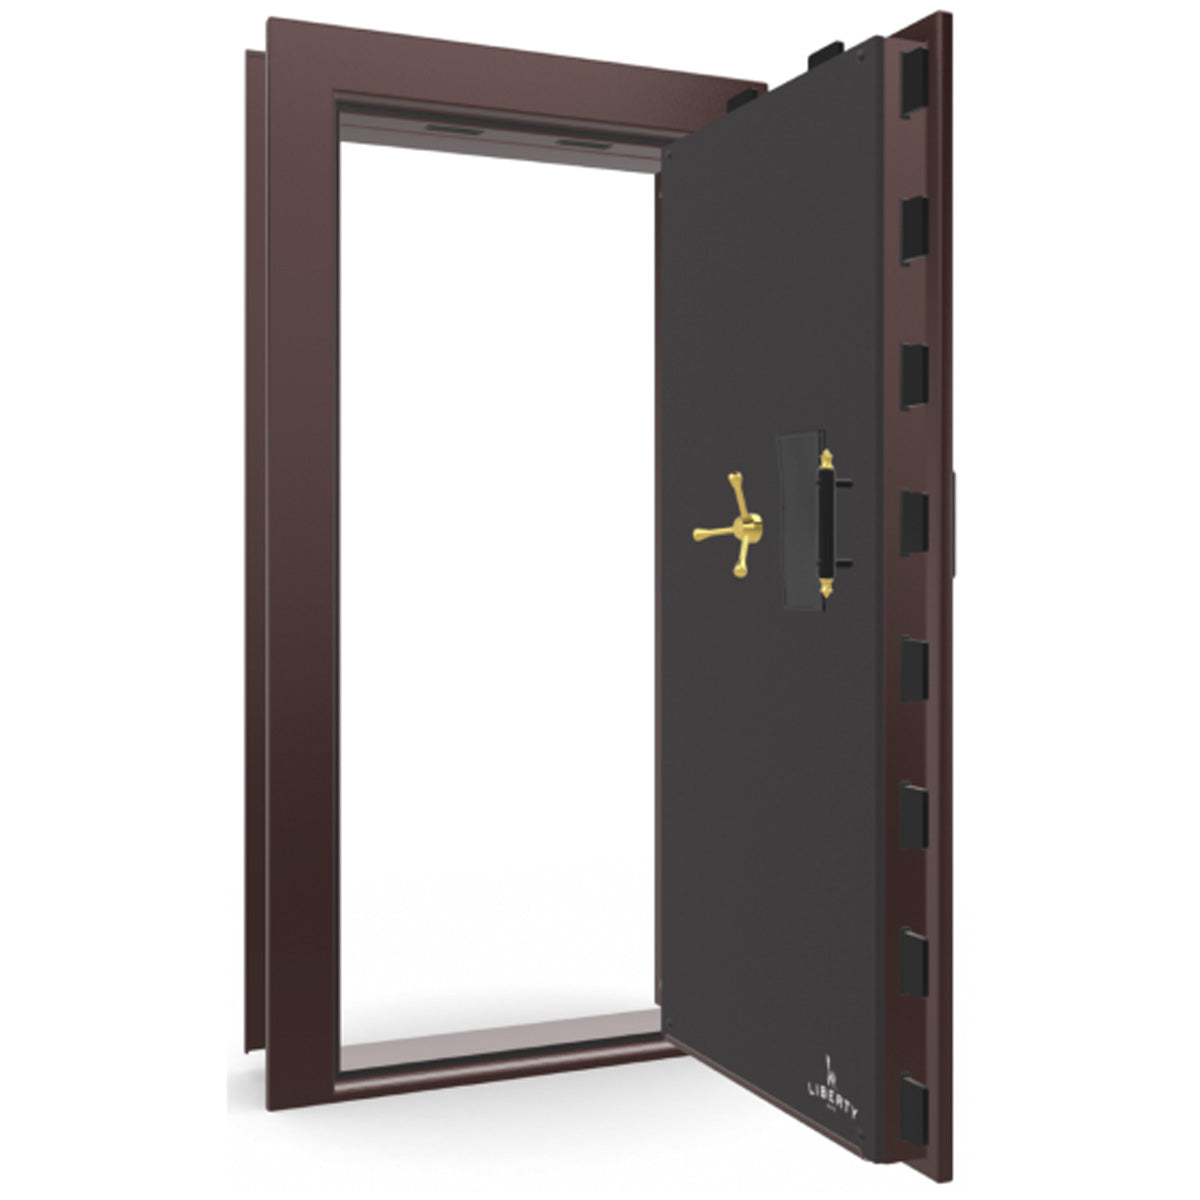 The Beast Vault Door in Burgundy Gloss with Brass Electronic Lock, Right Outswing, door open.